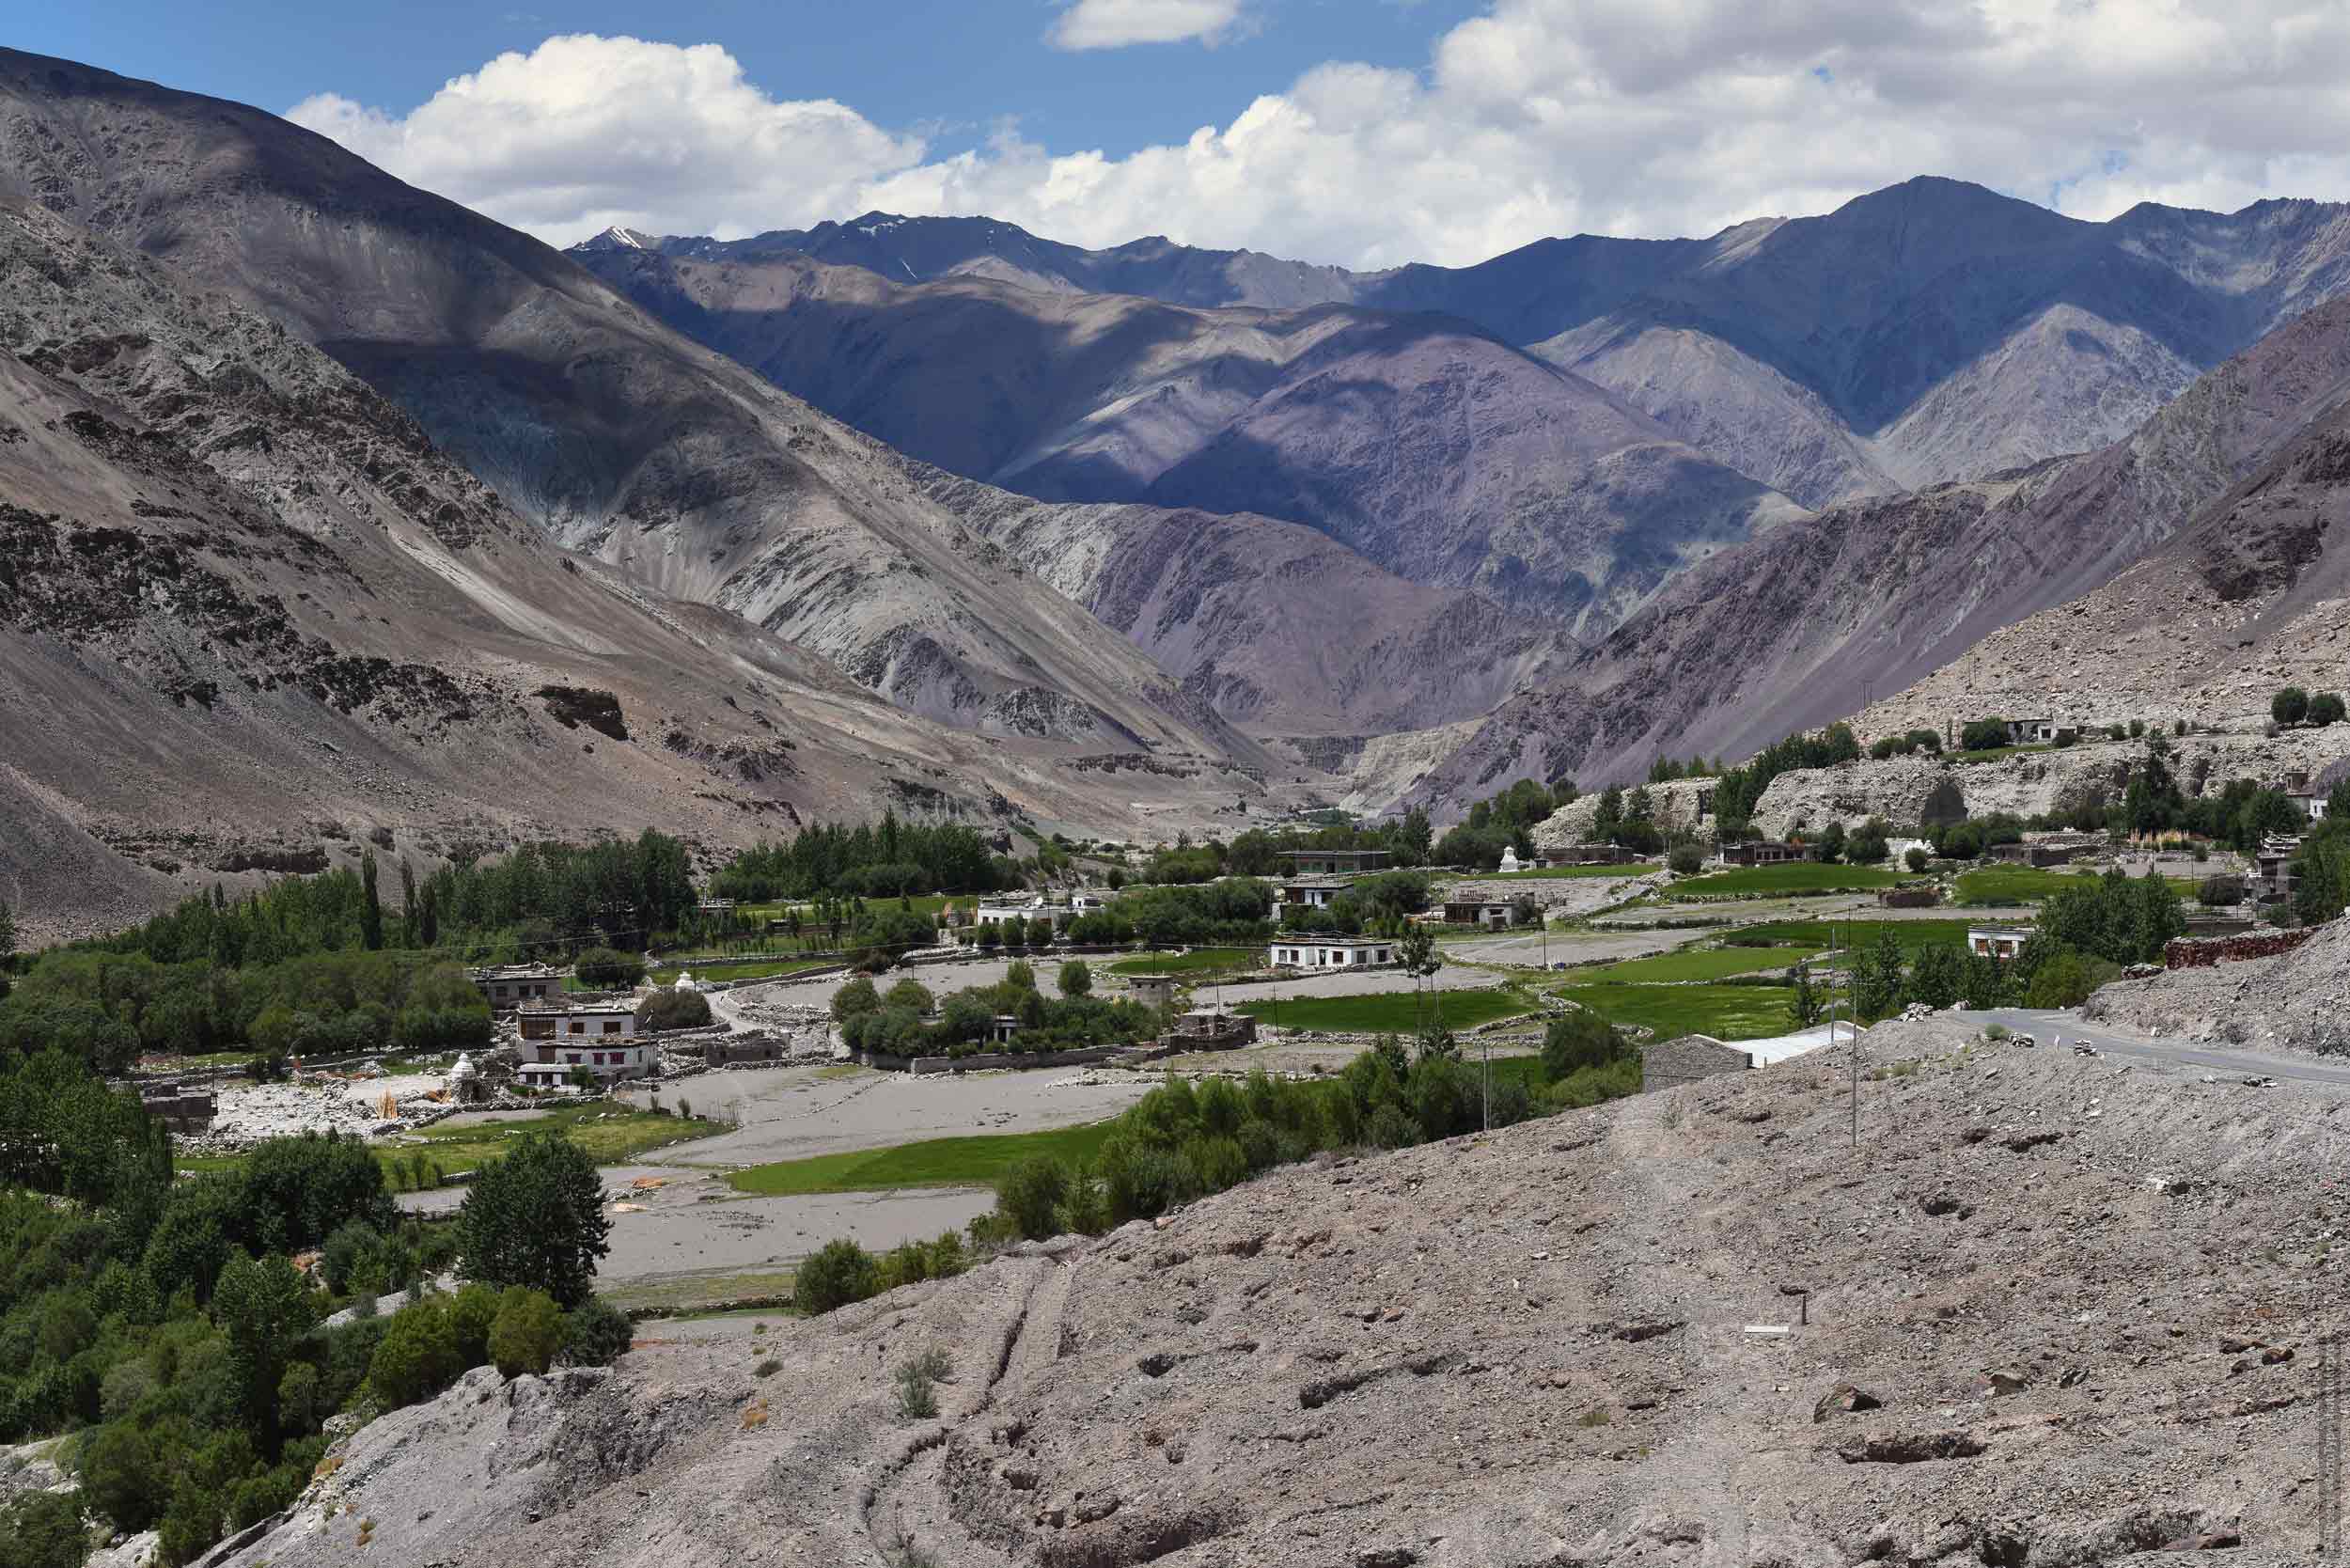 The road to Tso Moriri Lake, Ladakh women’s tour, August 31 - September 14, 2019.